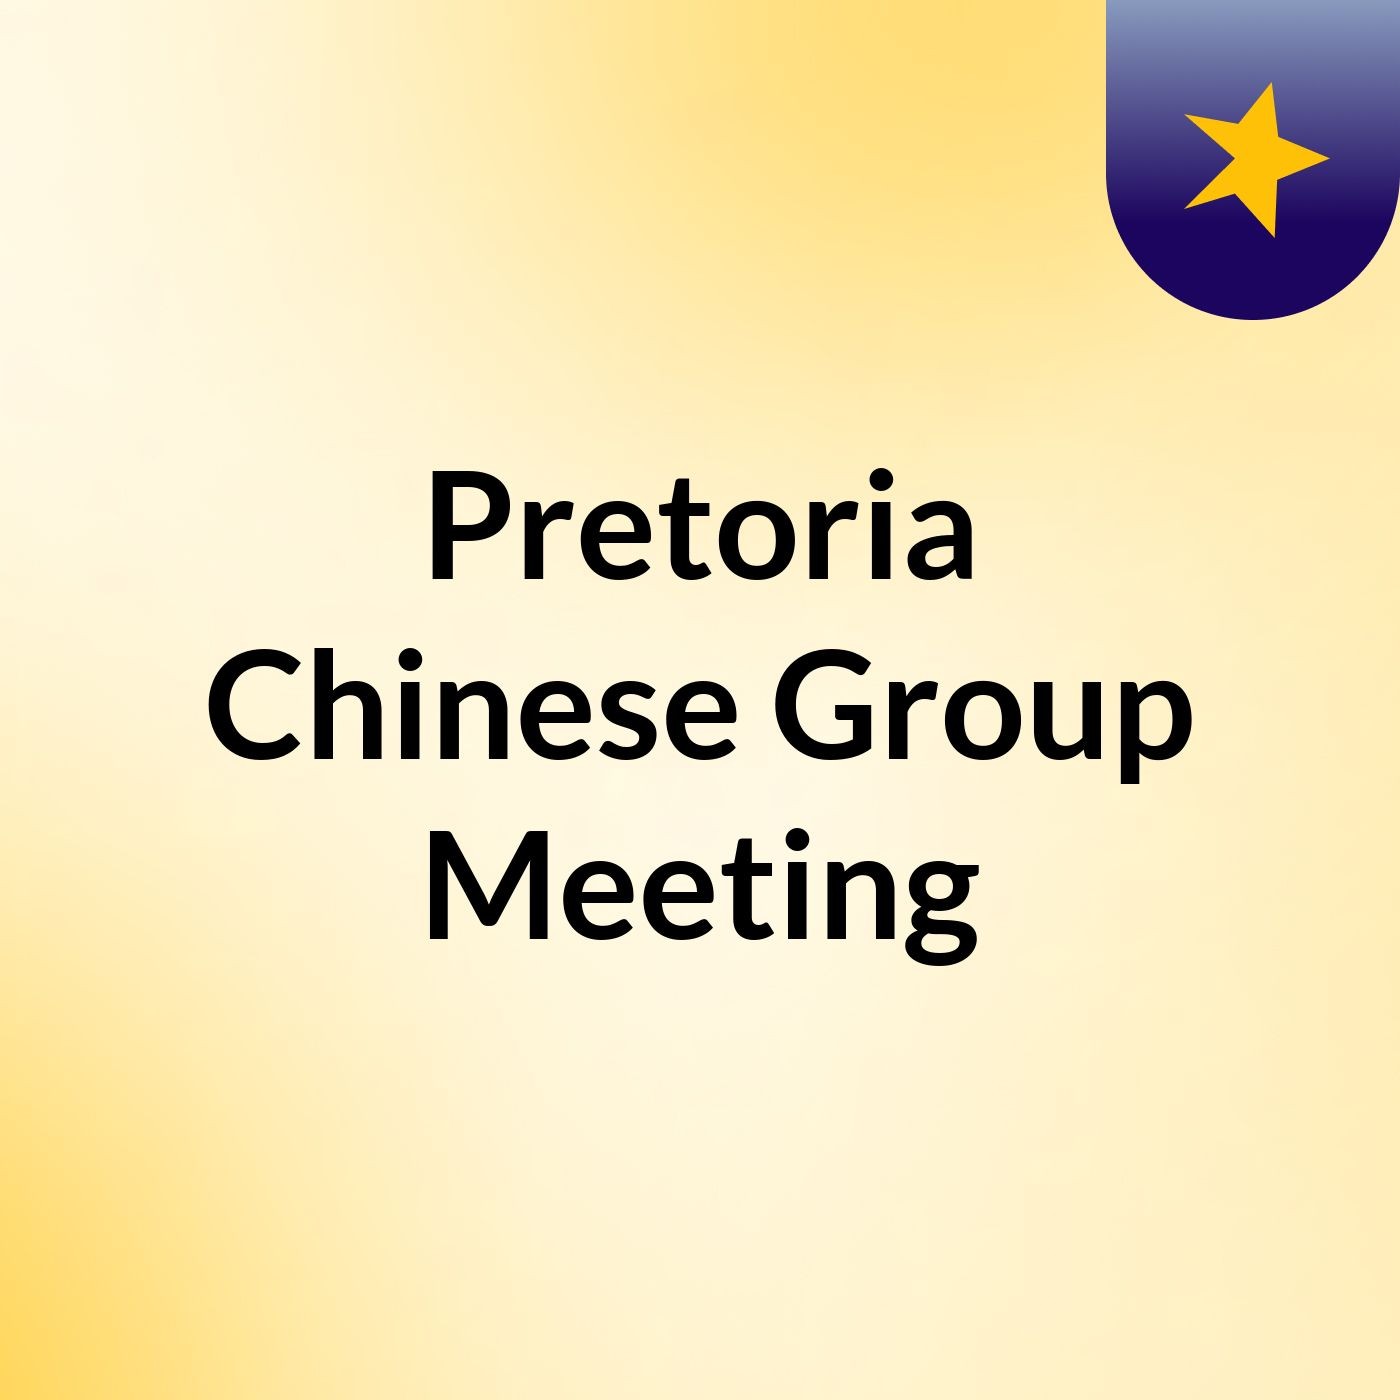 Pretoria Chinese Group Meeting